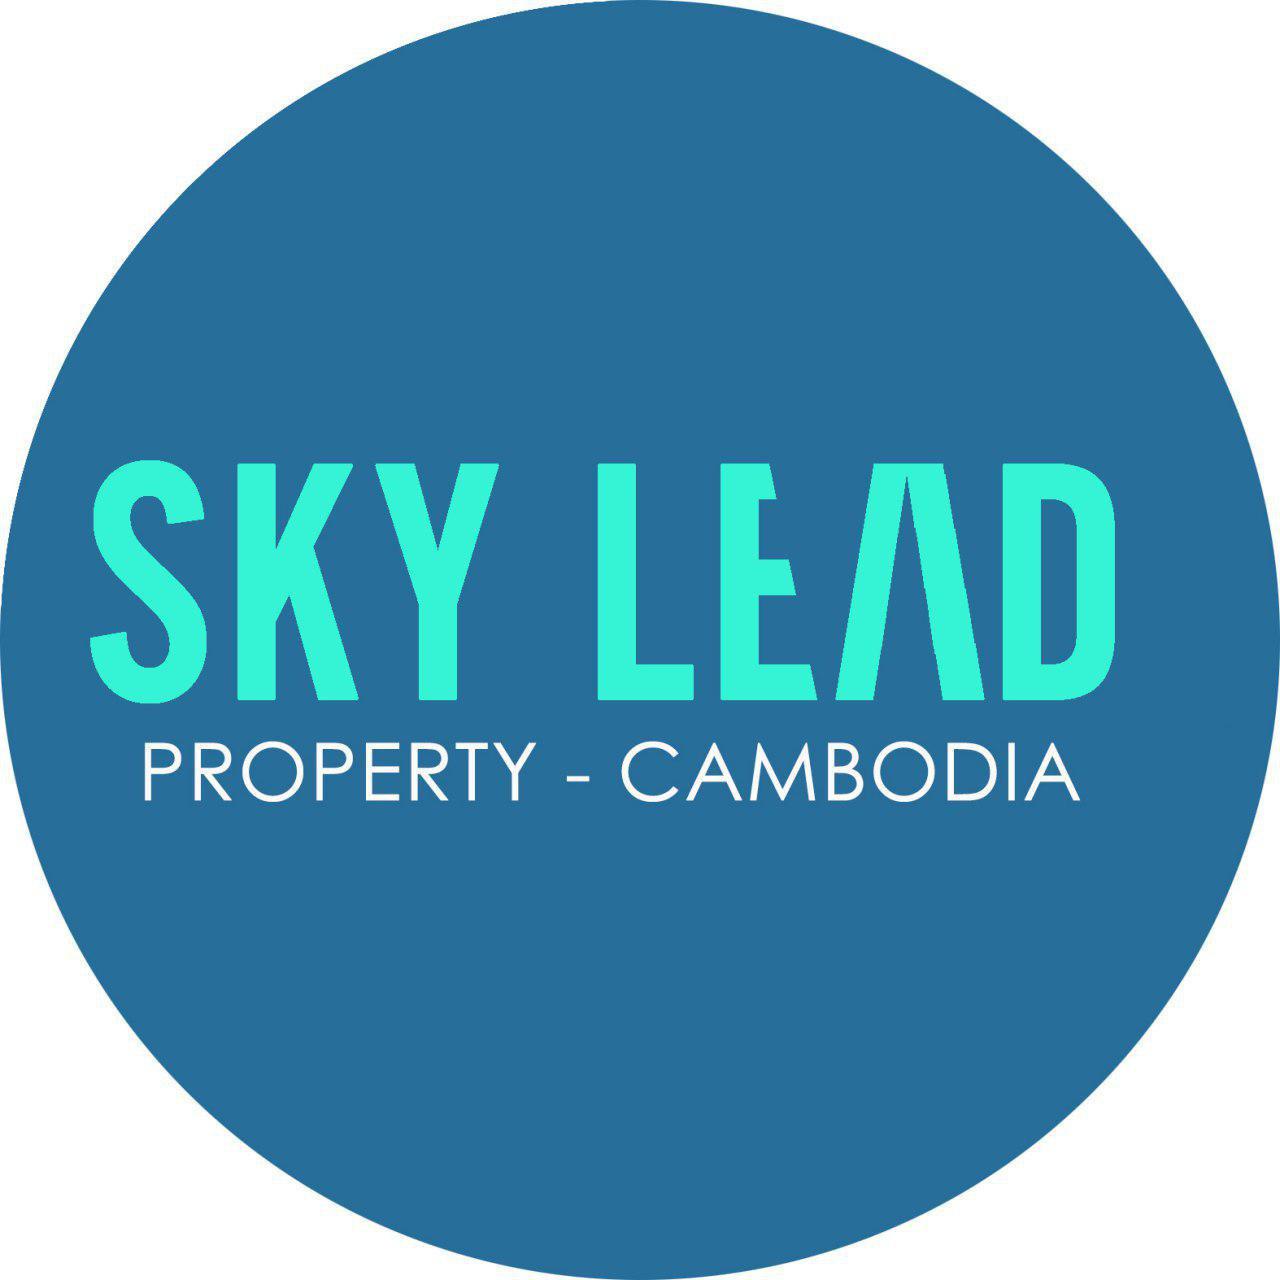 Sky Lead Property